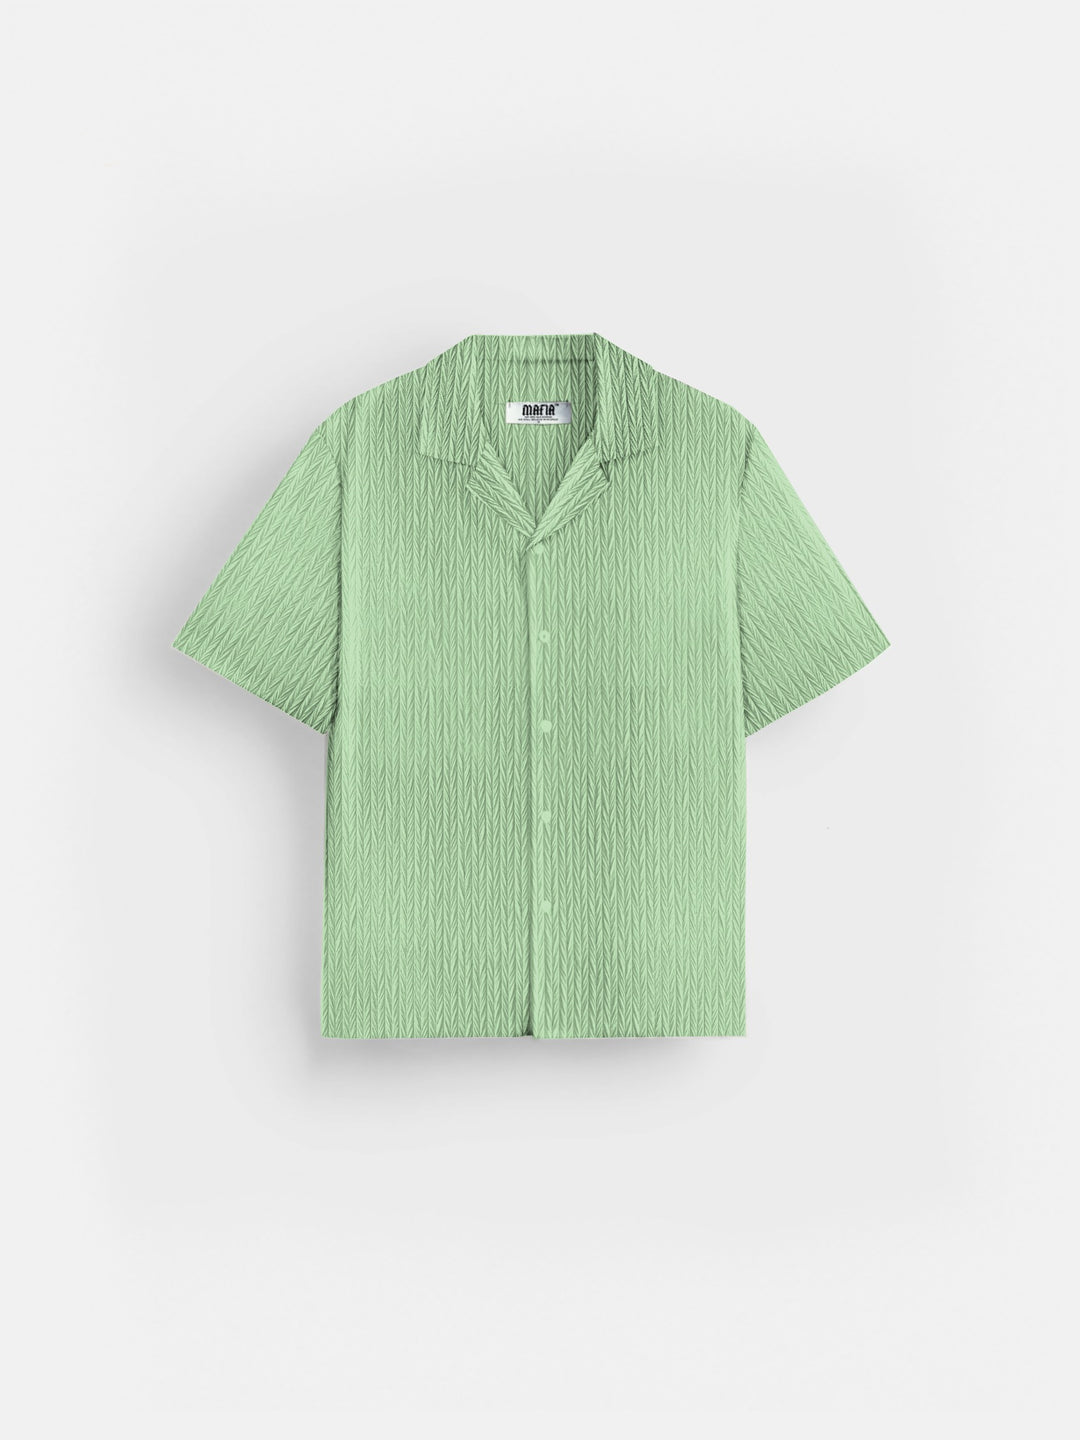 Oversize Structured Shirt - Quiet Green